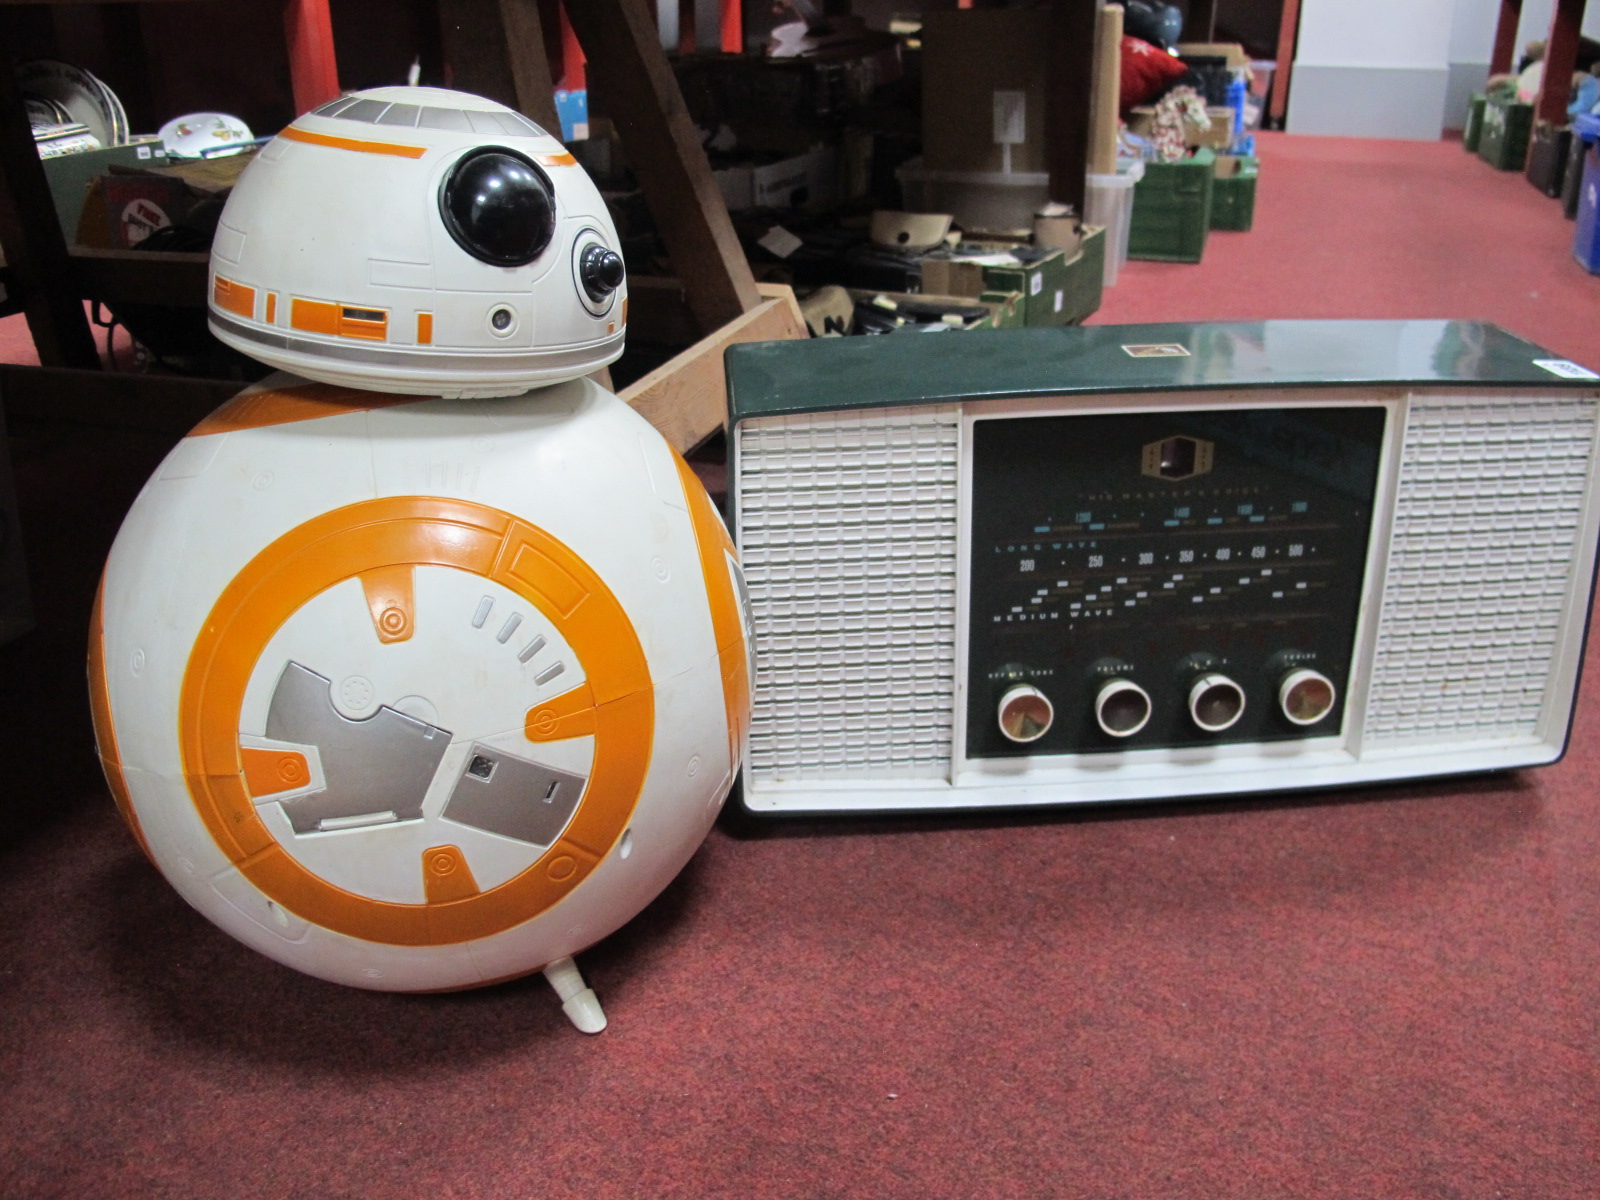 Star Wars Radio, HMV example is green casing. (2)